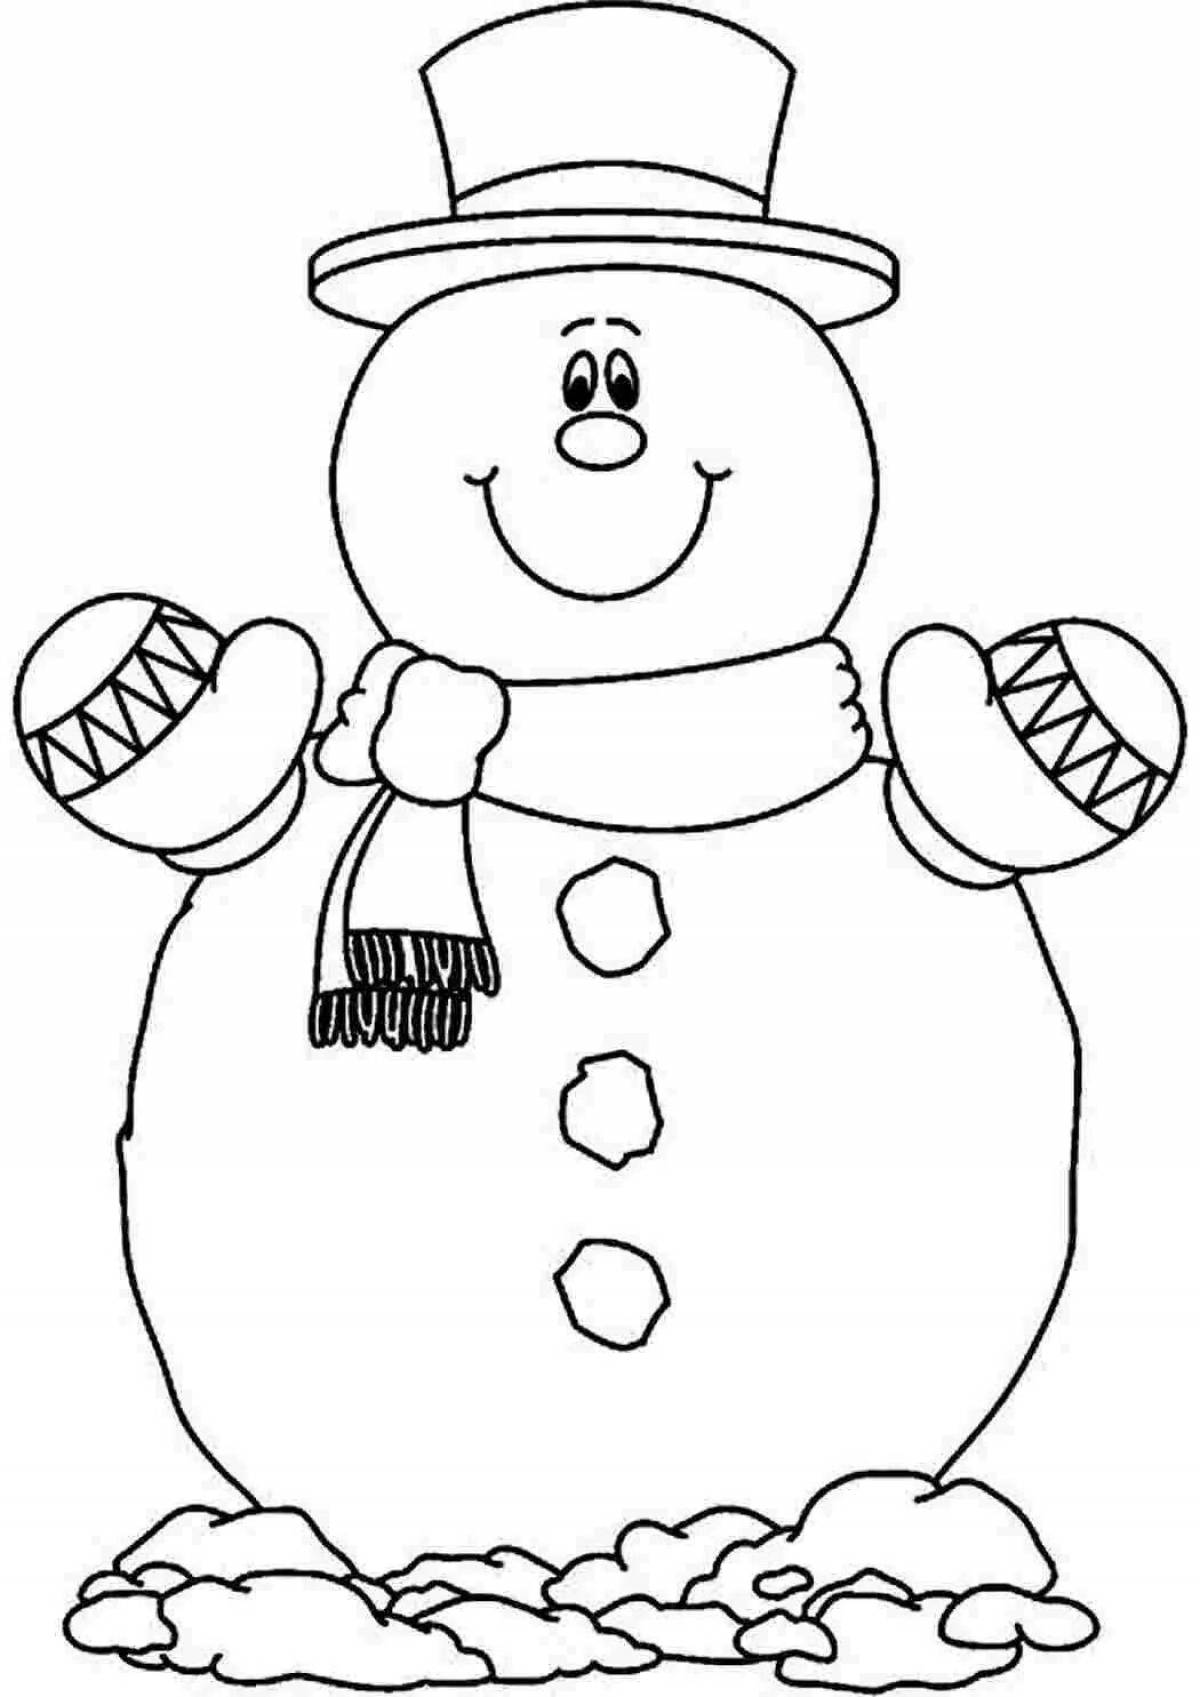 Coloring page friendly big snowman